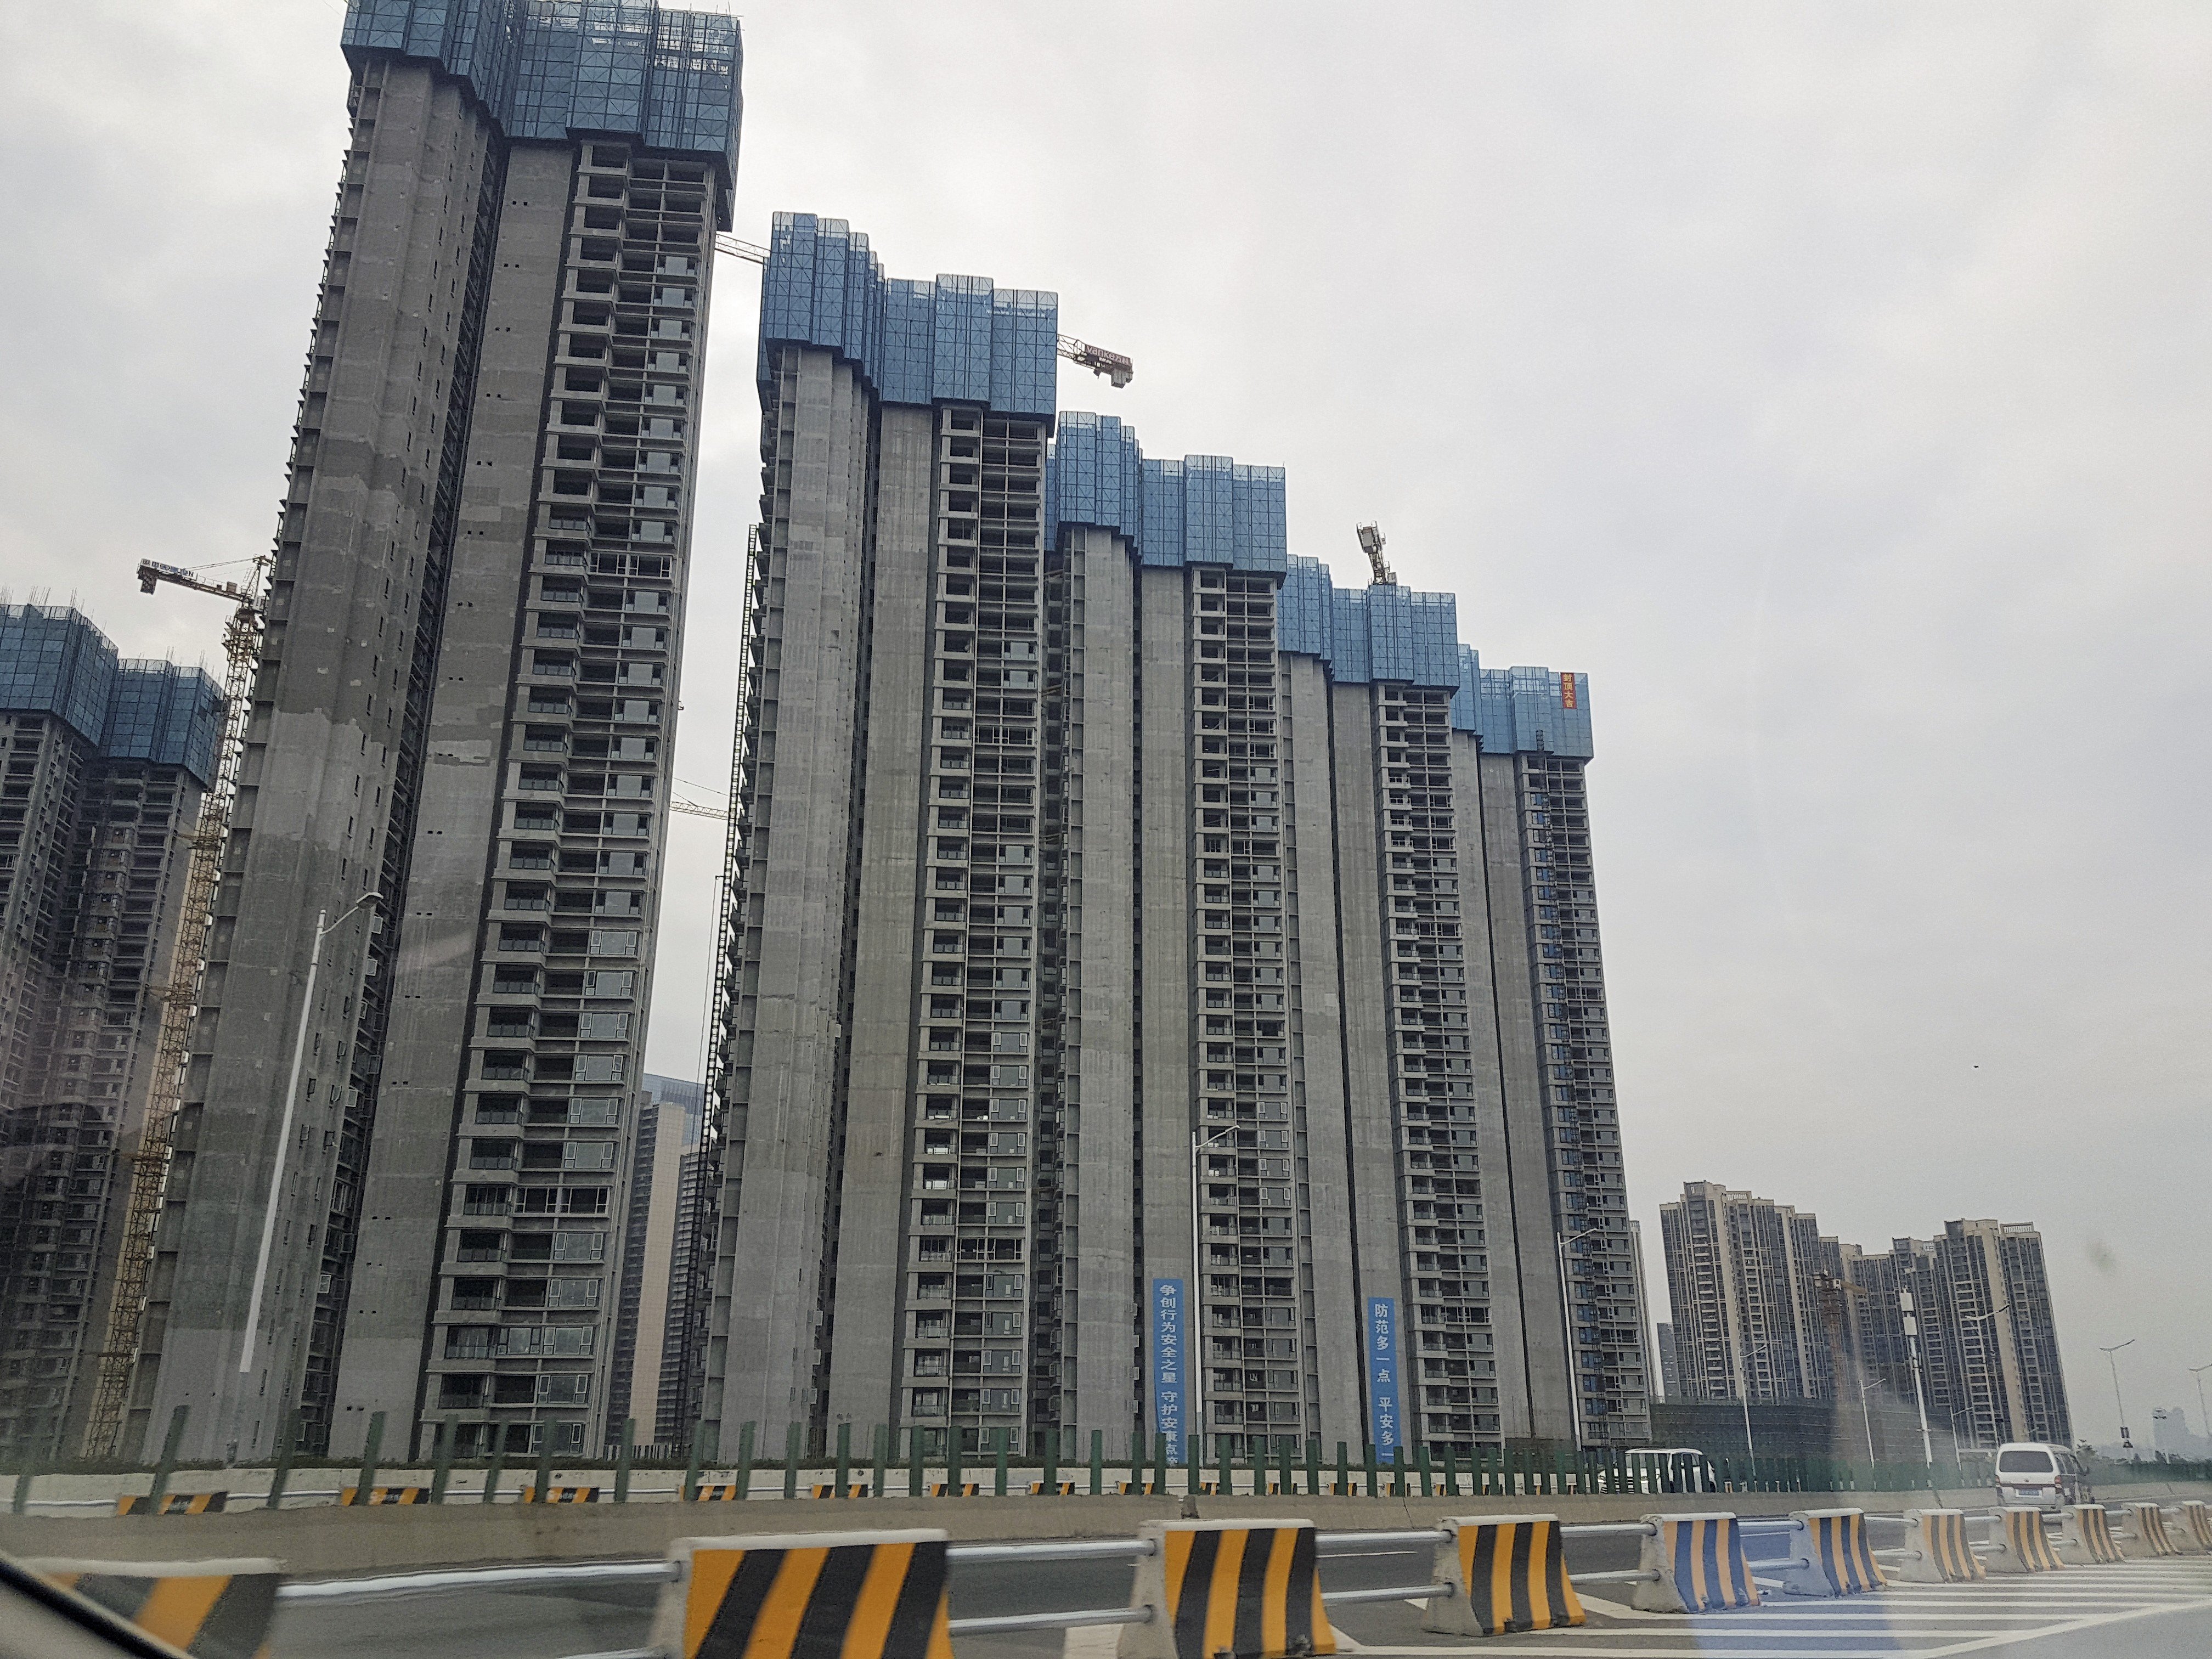 New apartment blocks under construction in Foshan, China. Photo: Martin Williams